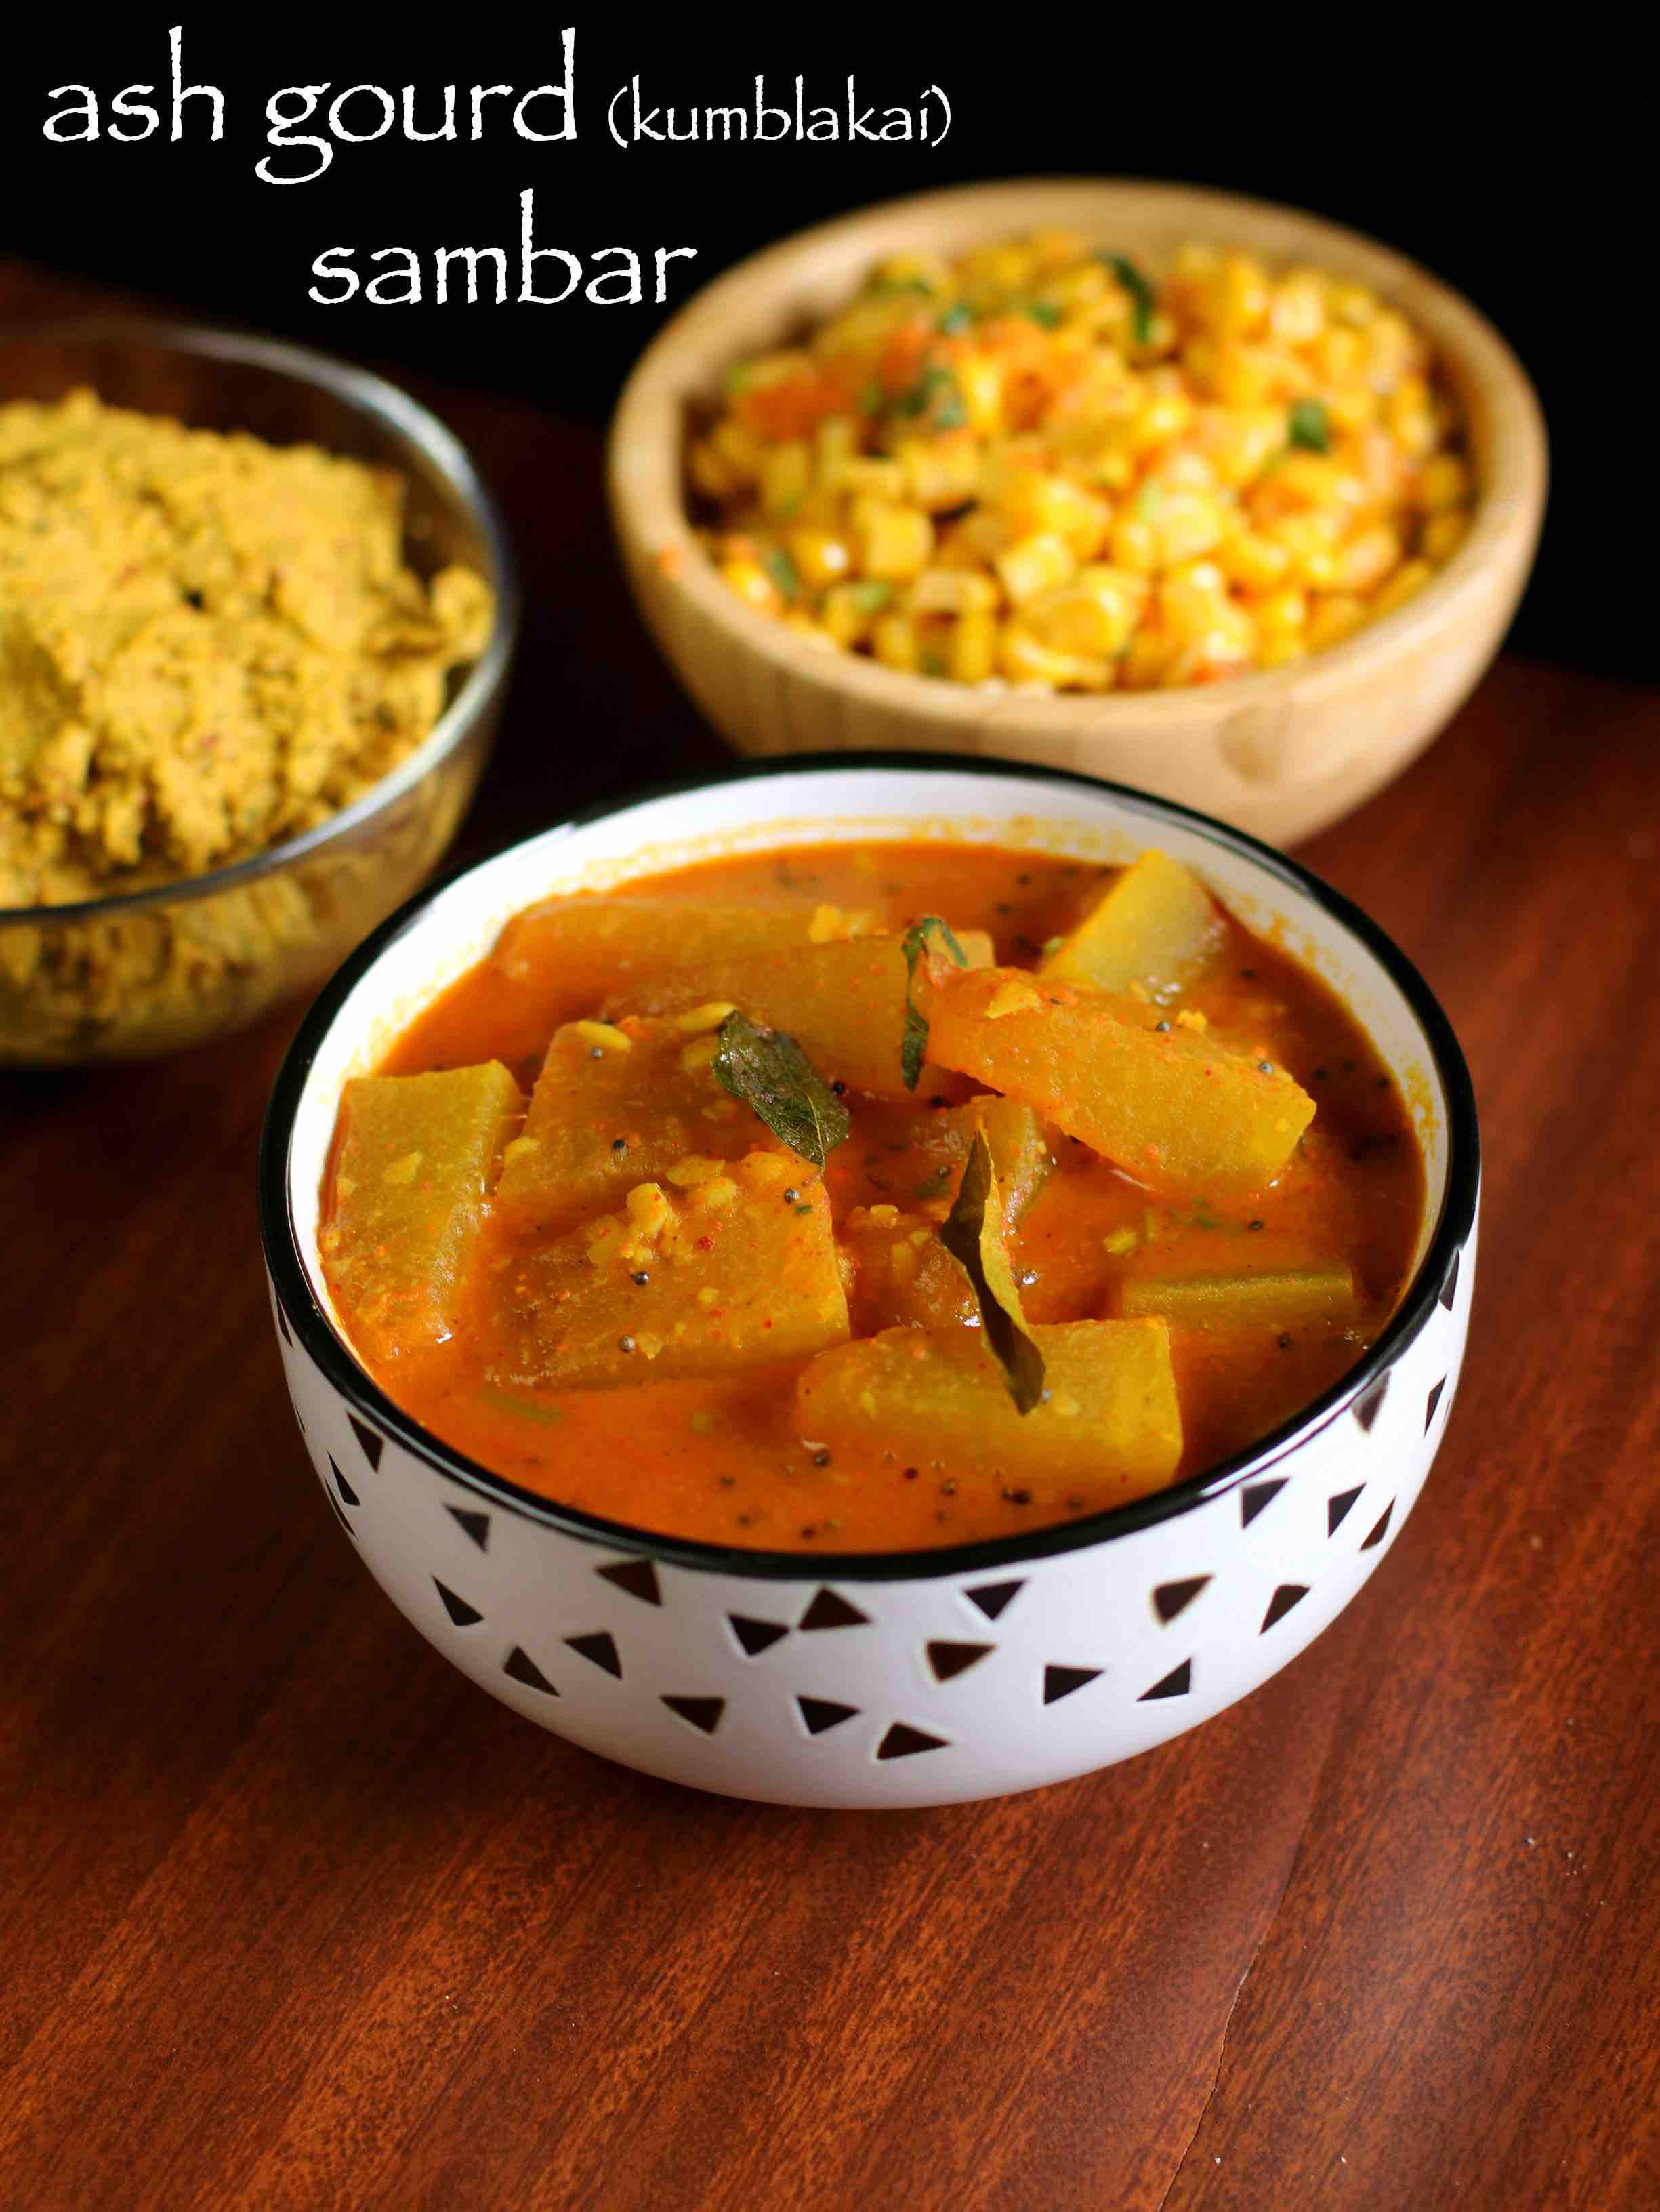 ash gourd sambar recipe | kumblakai koddel or sambar recipe